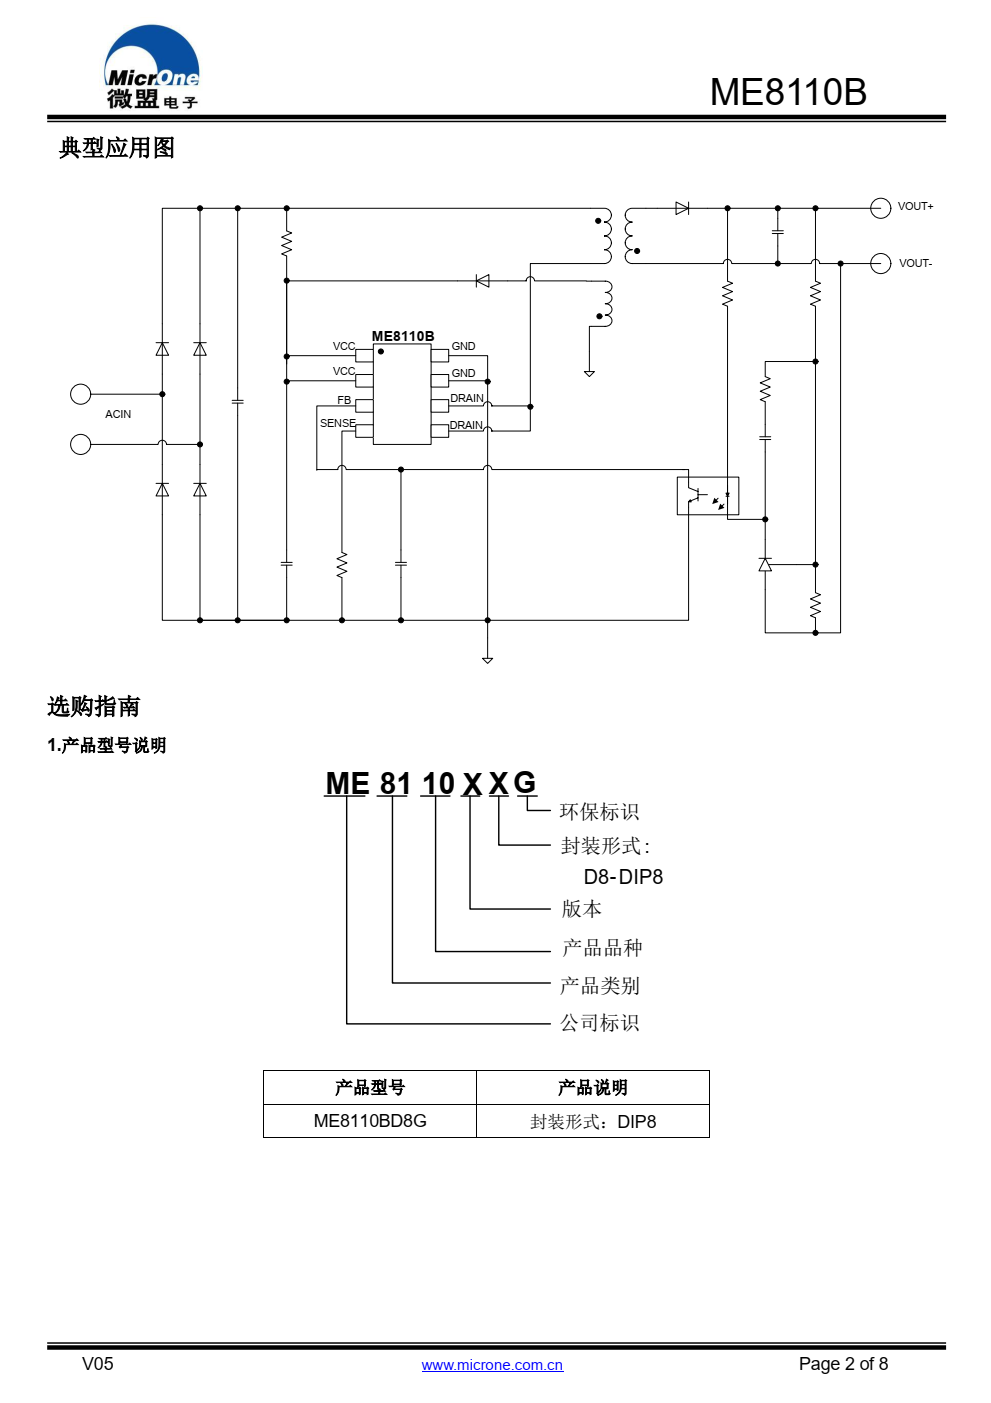 ME8110B 是一个高性能电流模式 PWM 控制器，内 置 650V/2A 功率 MOSFET